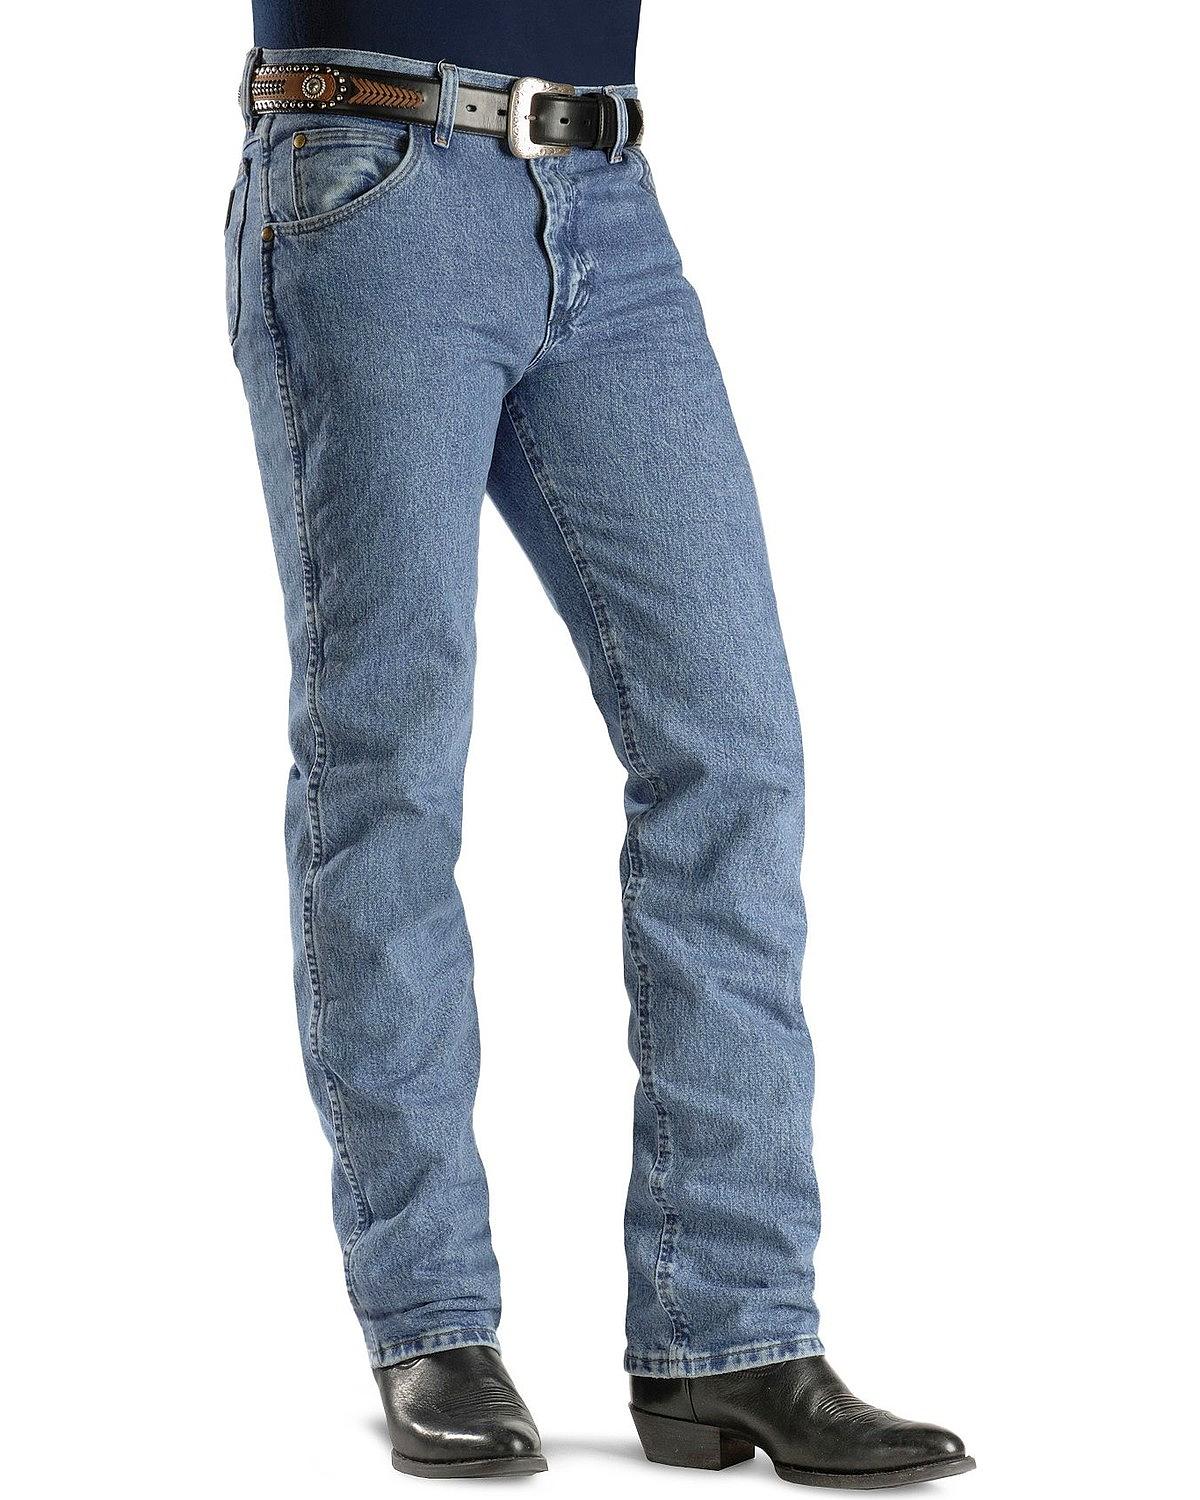 wrangler men's premium performance cowboy cut slim fit jean, stonewashed, 38w x 30l - image 2 of 2